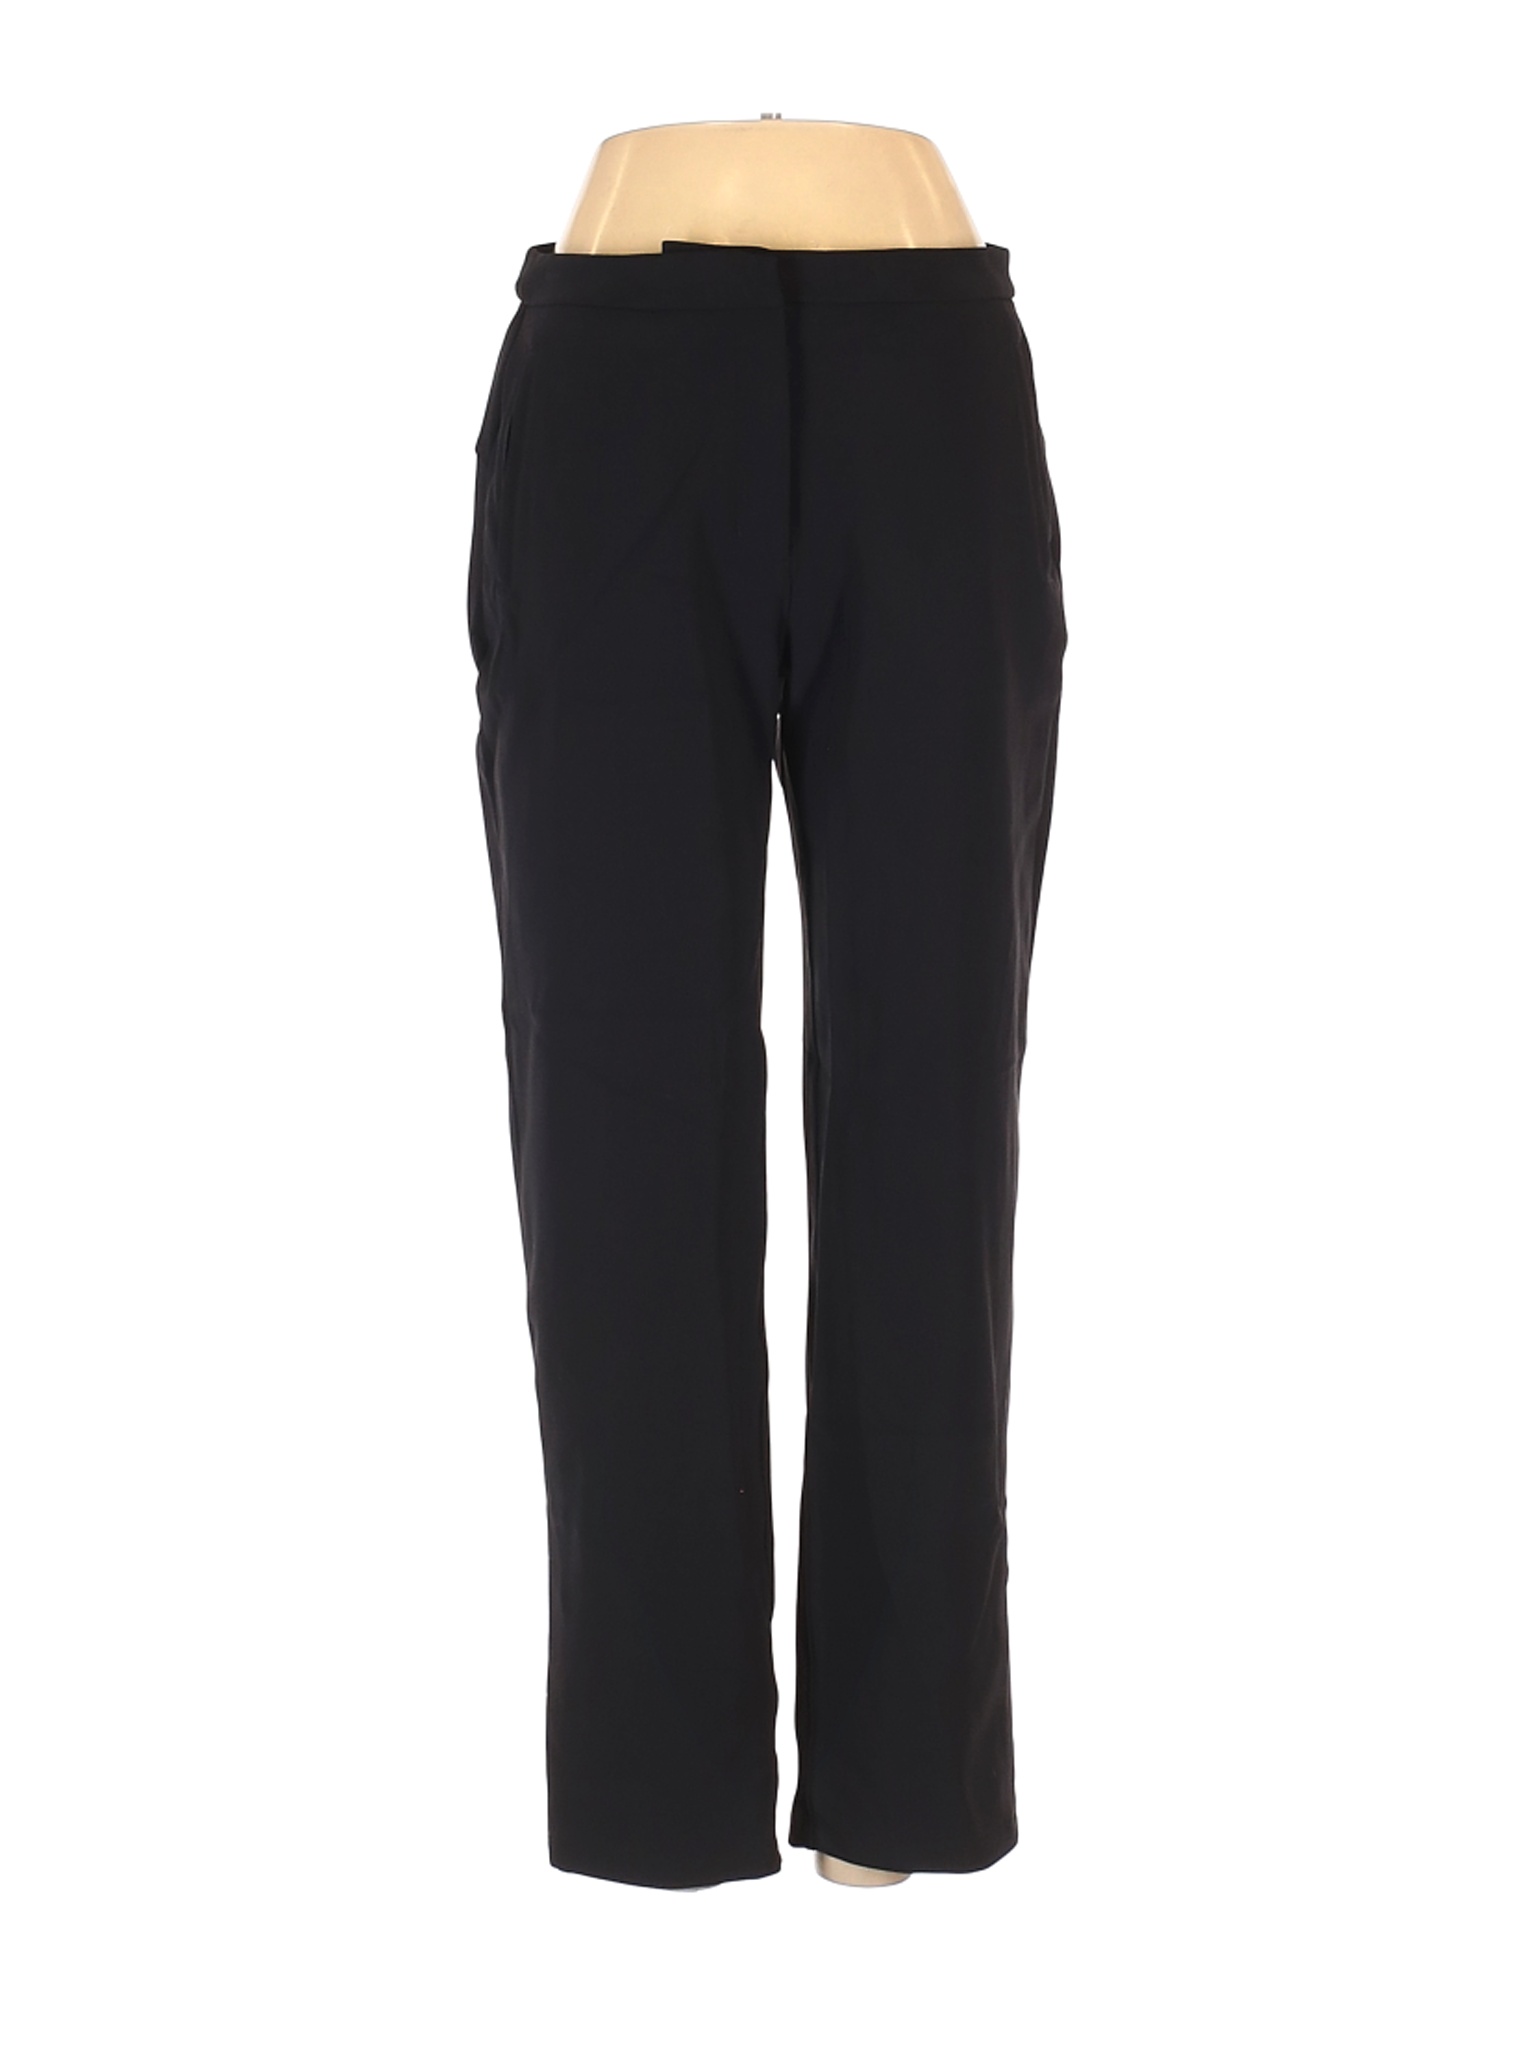 Lululemon Athletica Women Black Casual Pants 10 | eBay